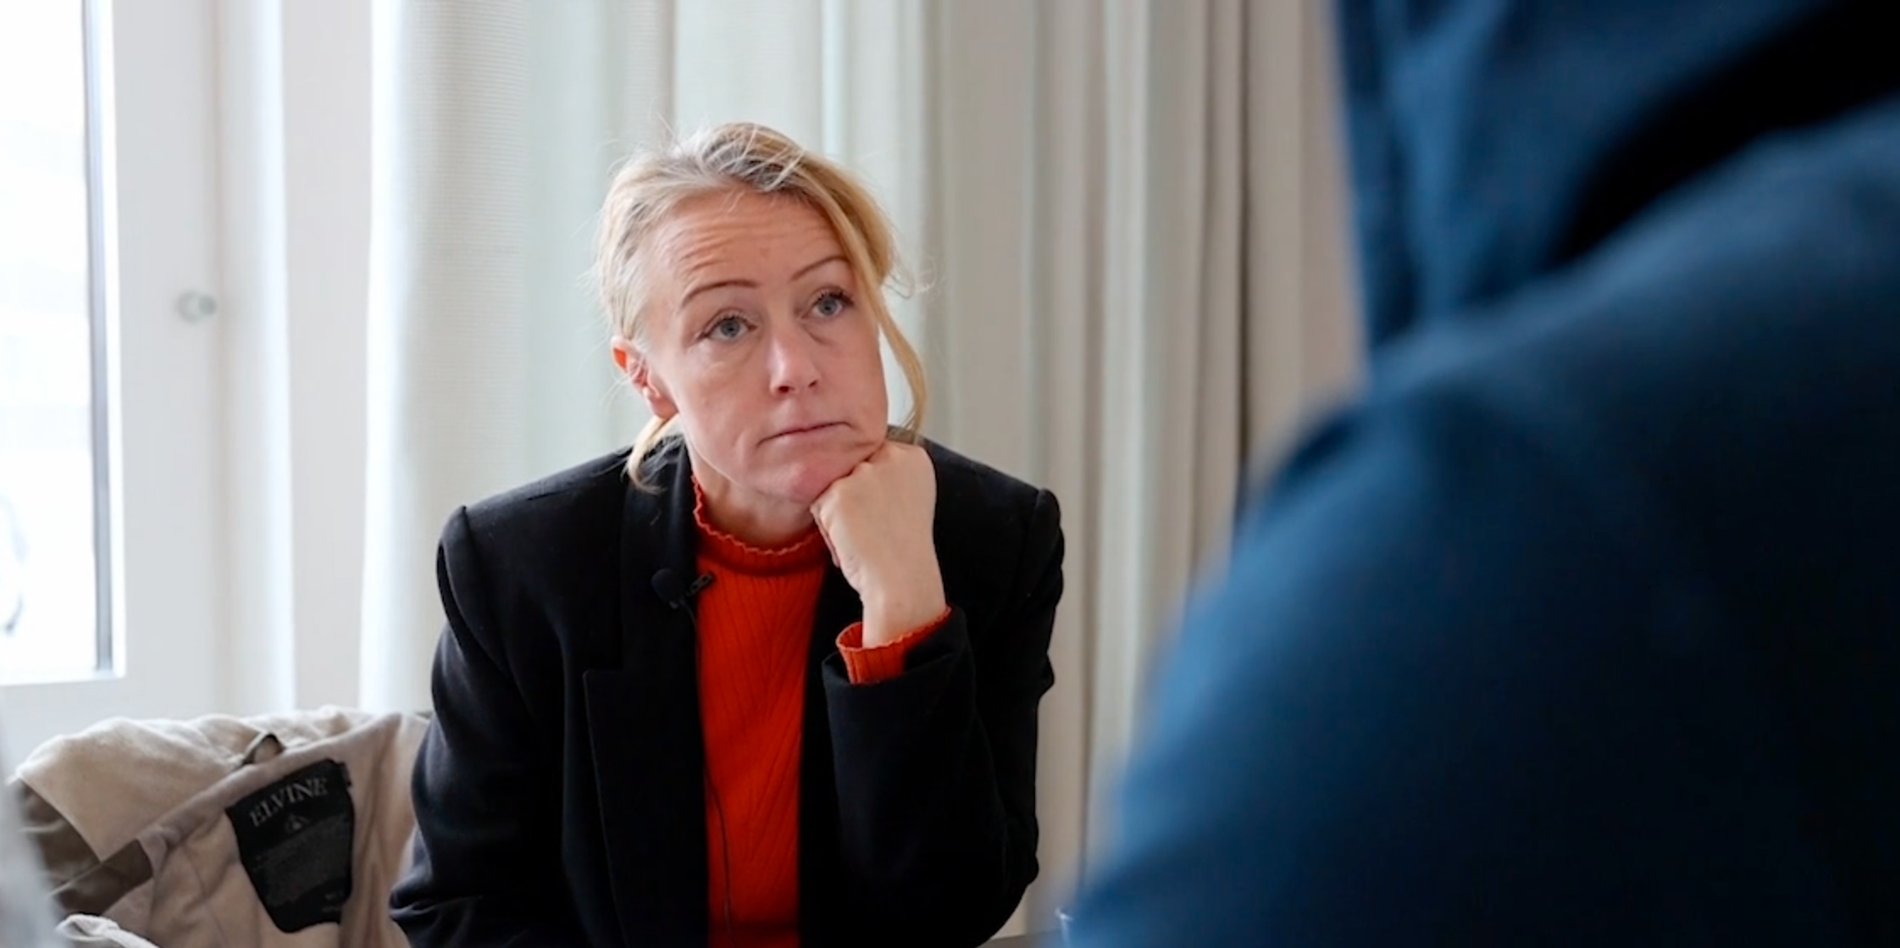 Aftonbladets reporter Susanna Nygren intervjuar Alex.